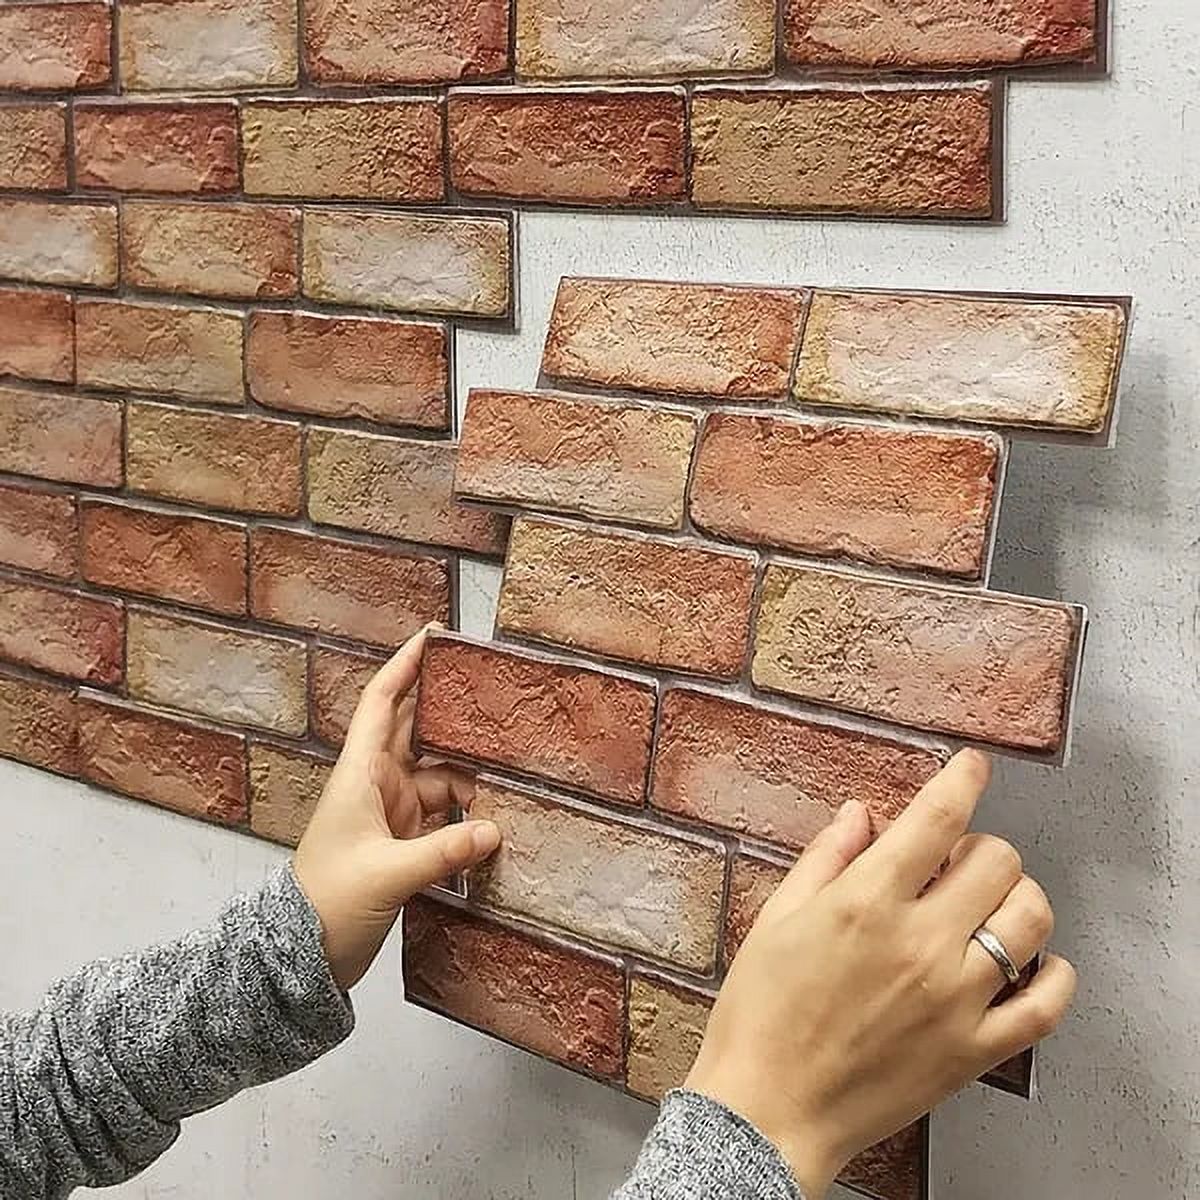 20Pcs 3D Tile Brick Wall Sticker Self-adhesive Waterproof PVC Panel  Wallpaper,Red